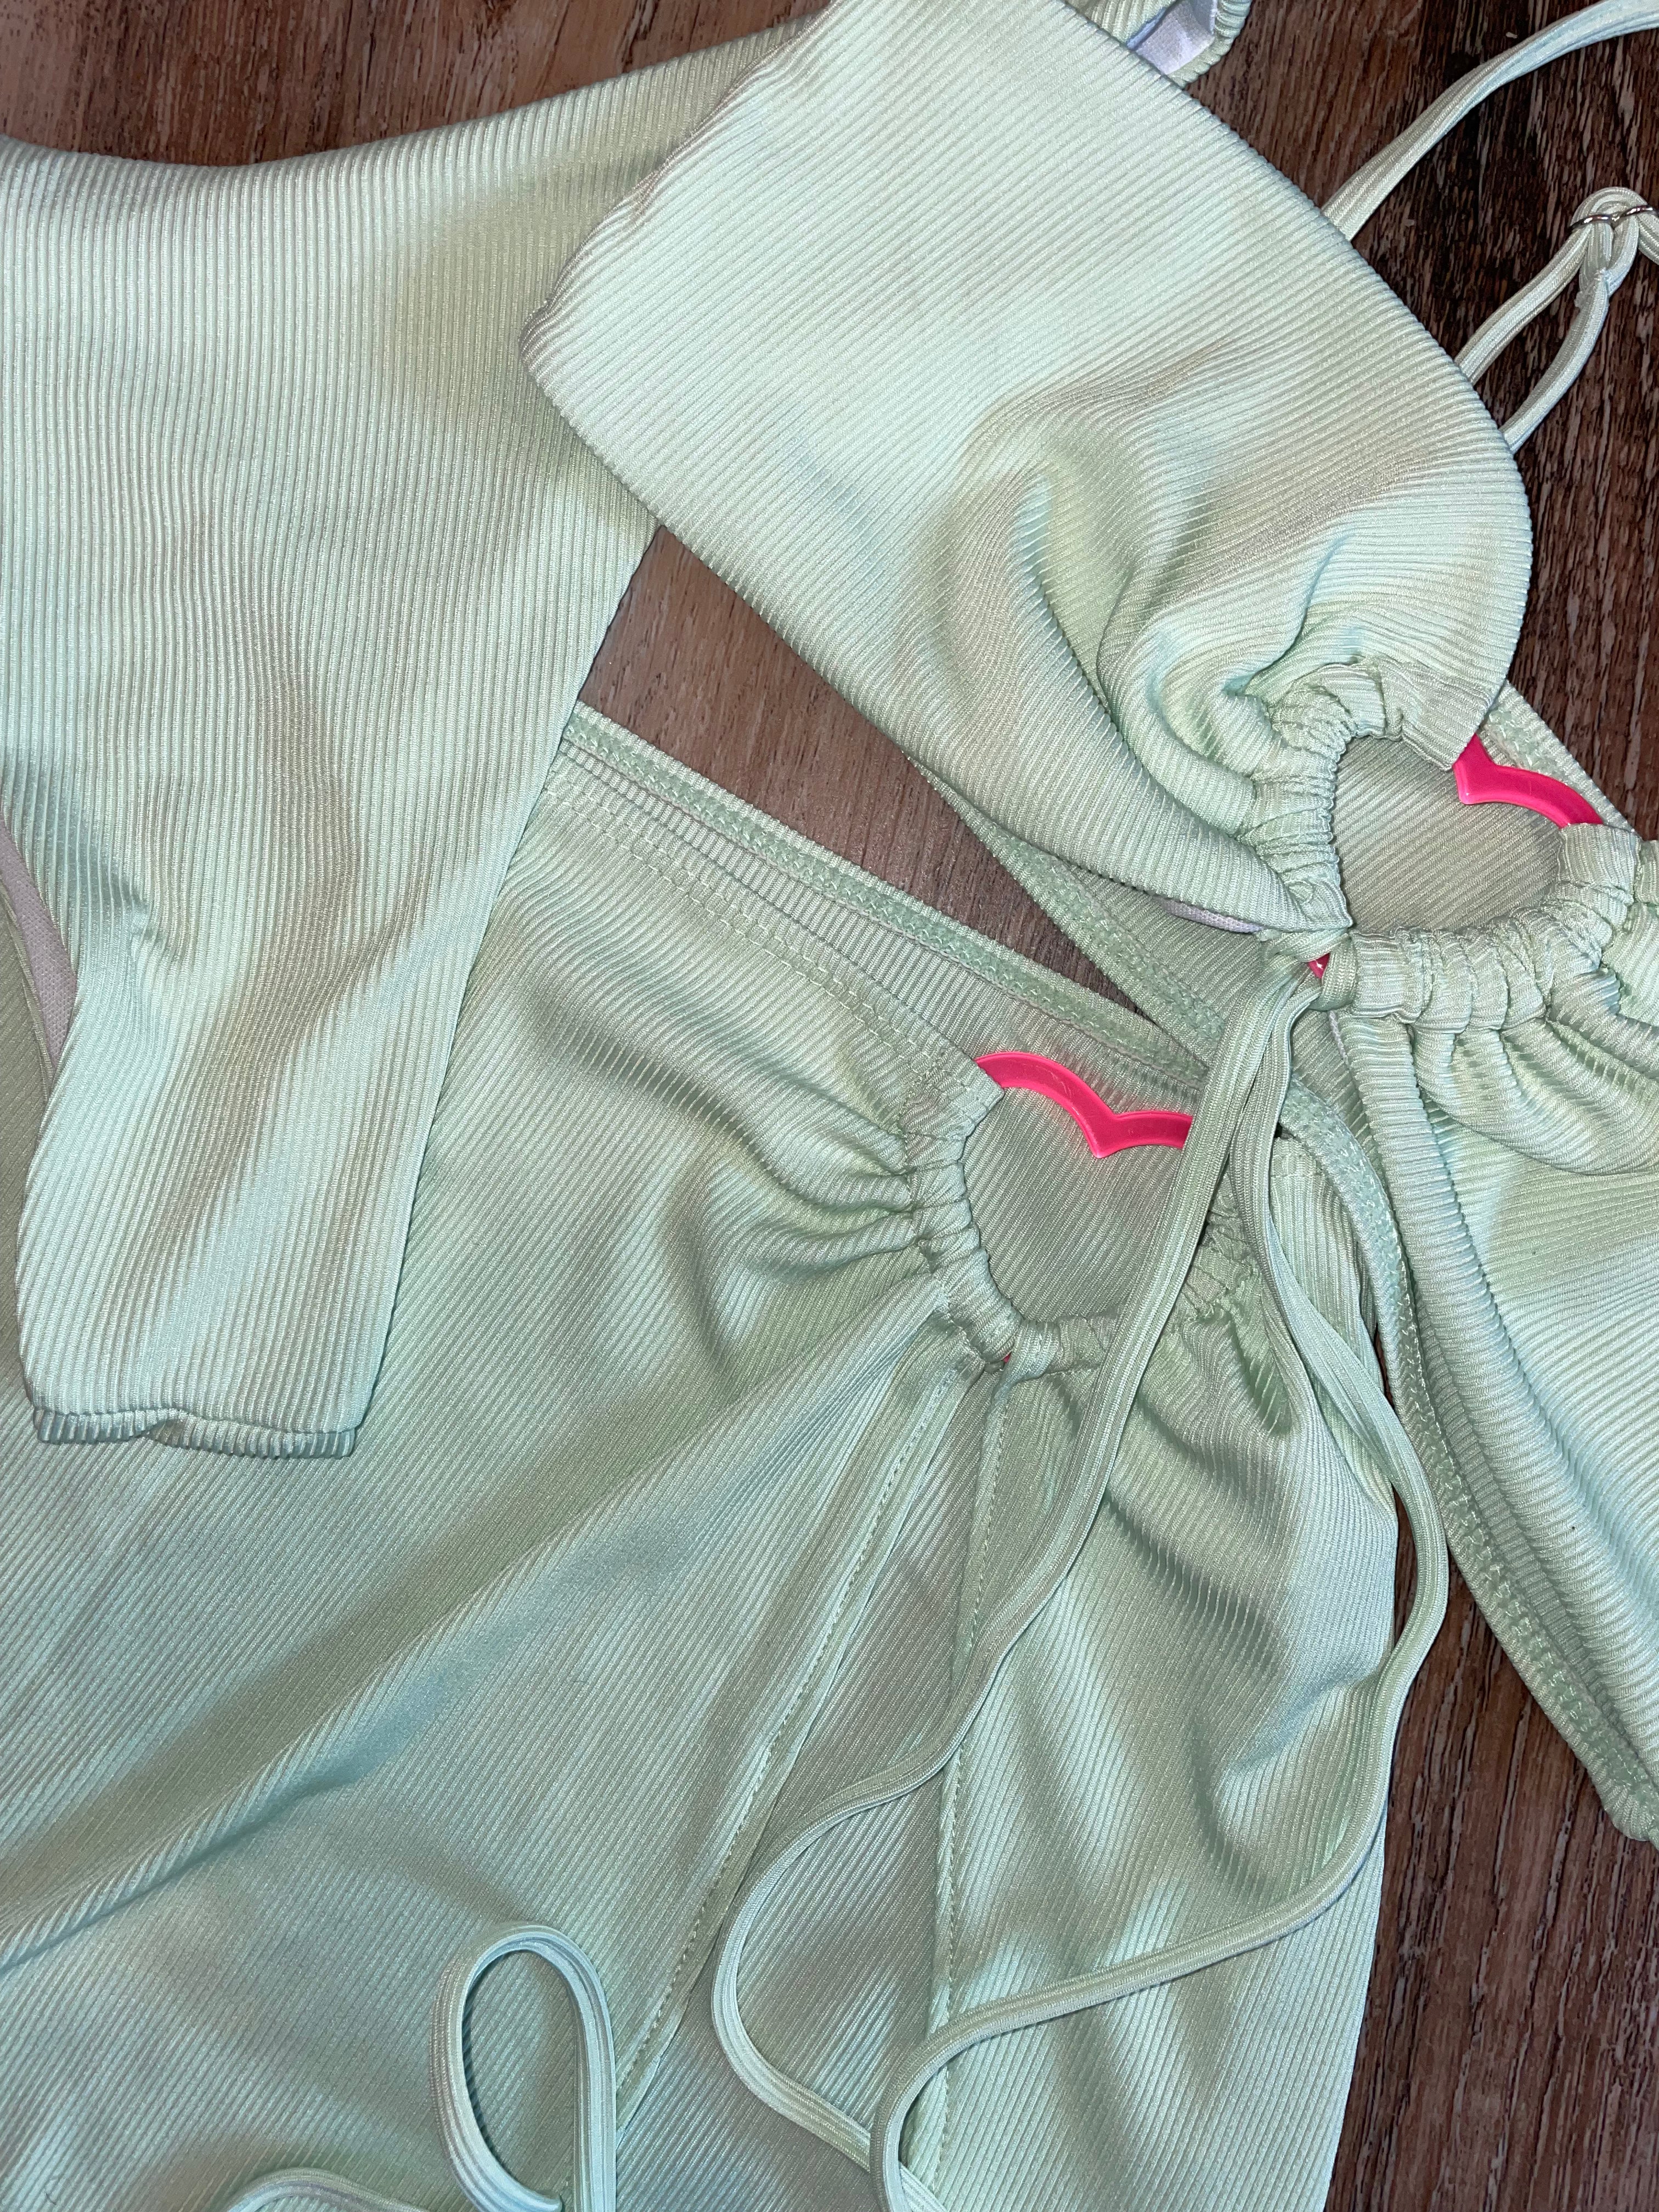 Beach Babe Cover-up Bikini - Mint Green